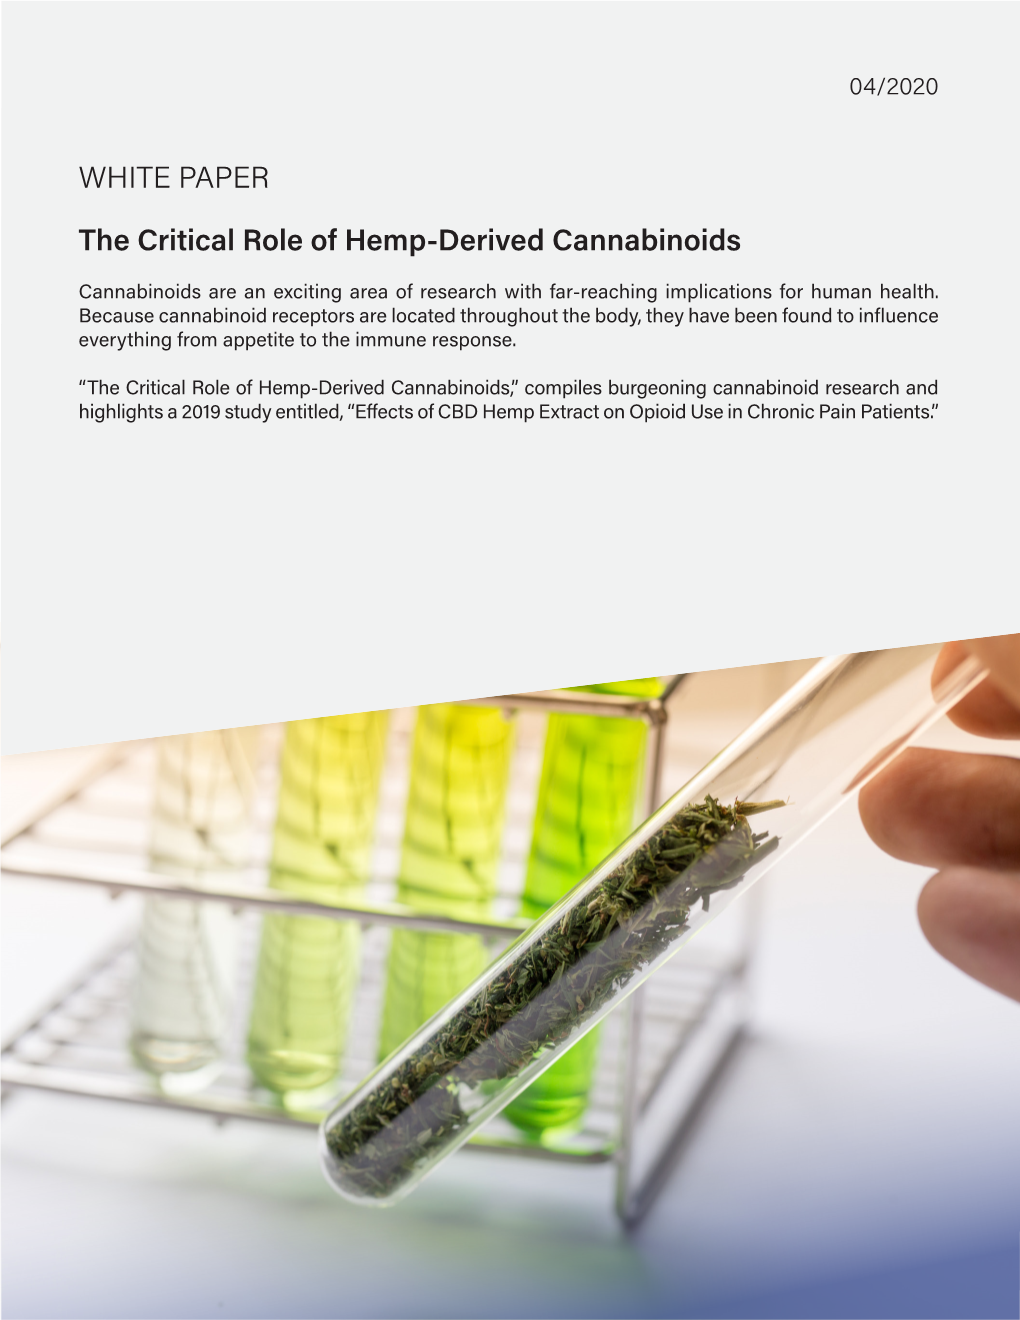 WHITE PAPER the Critical Role of Hemp-Derived Cannabinoids